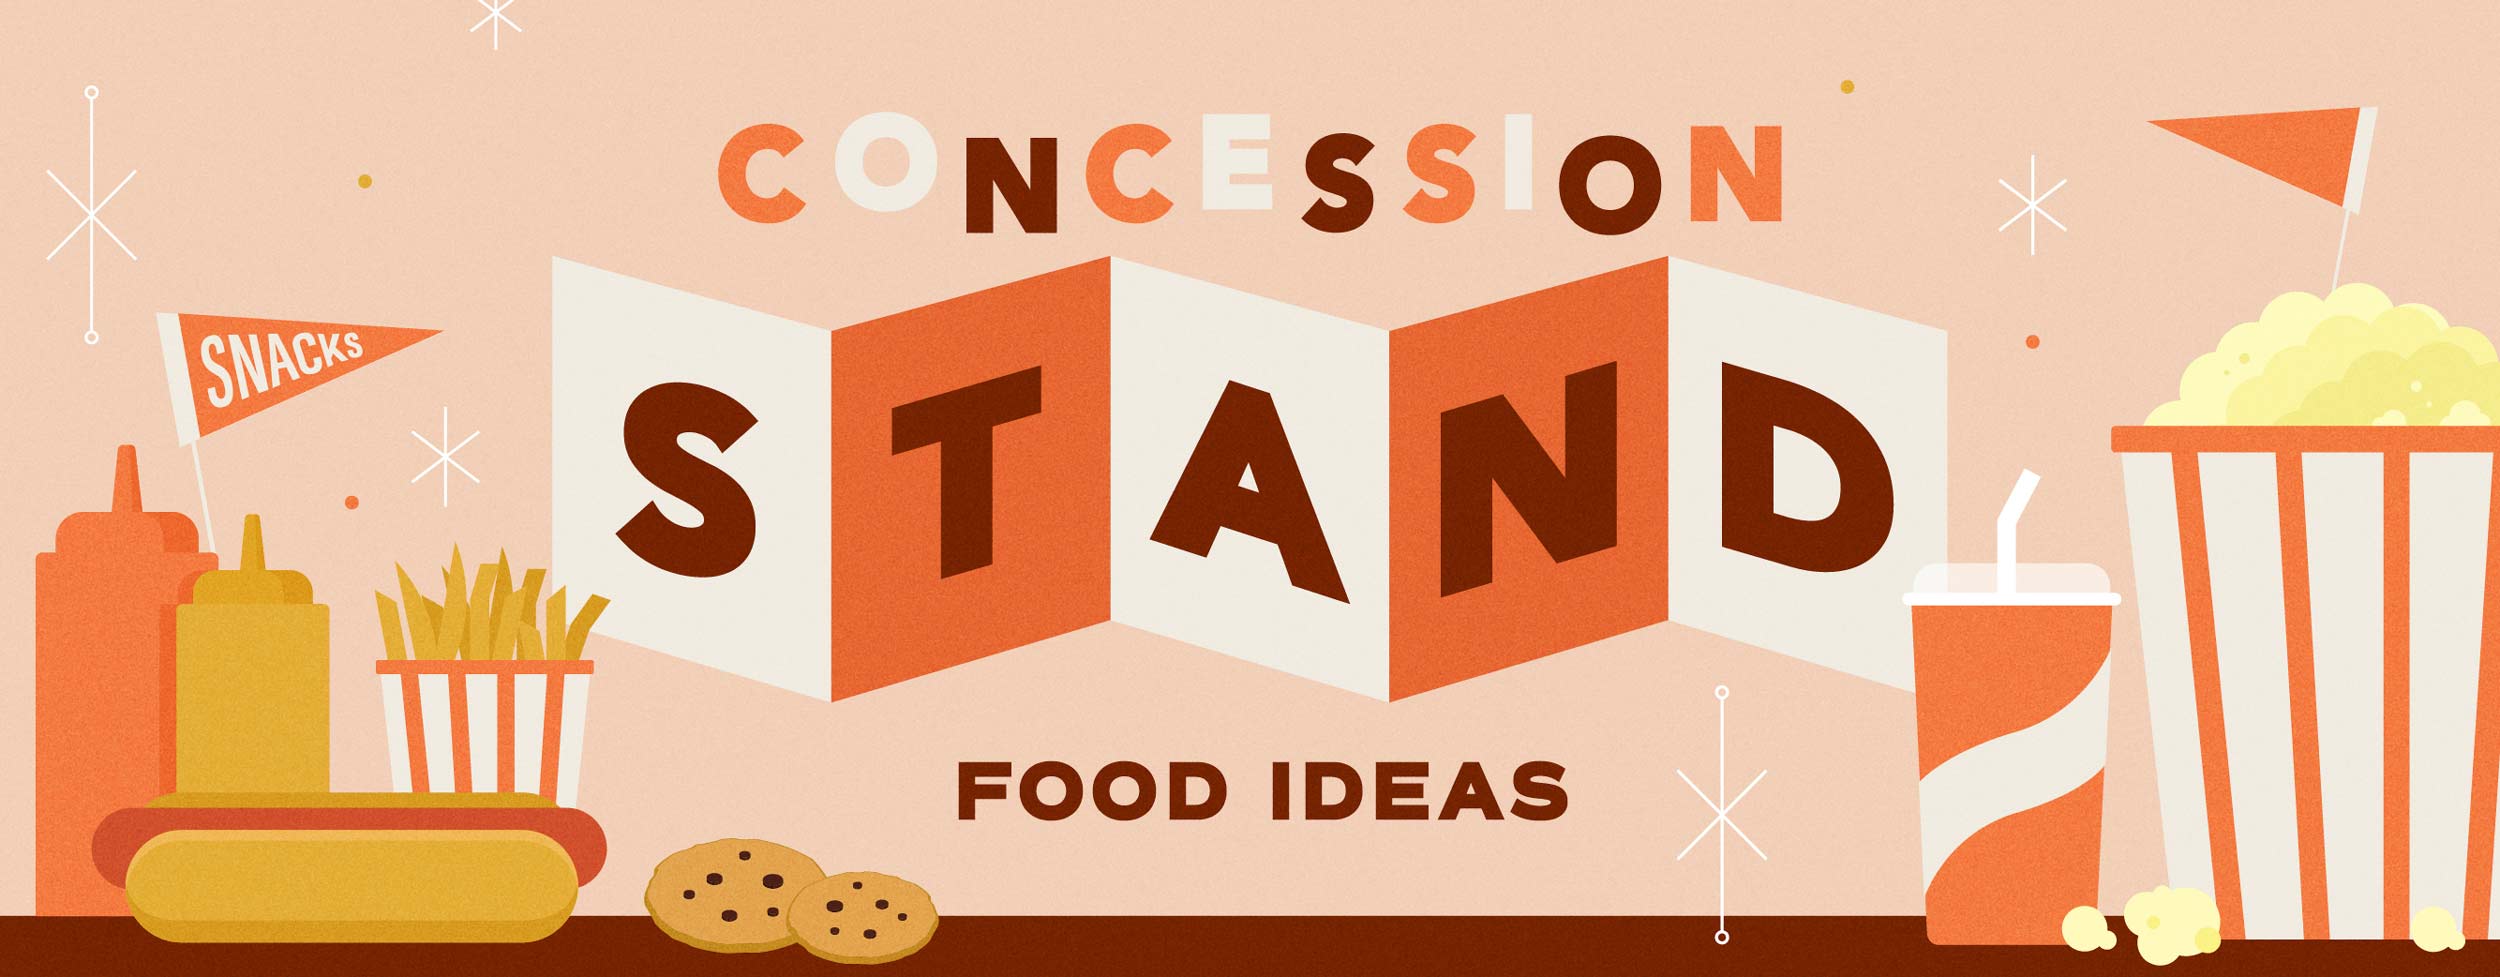 Concession Stand Food Ideas: Popular & Profitable Ideas